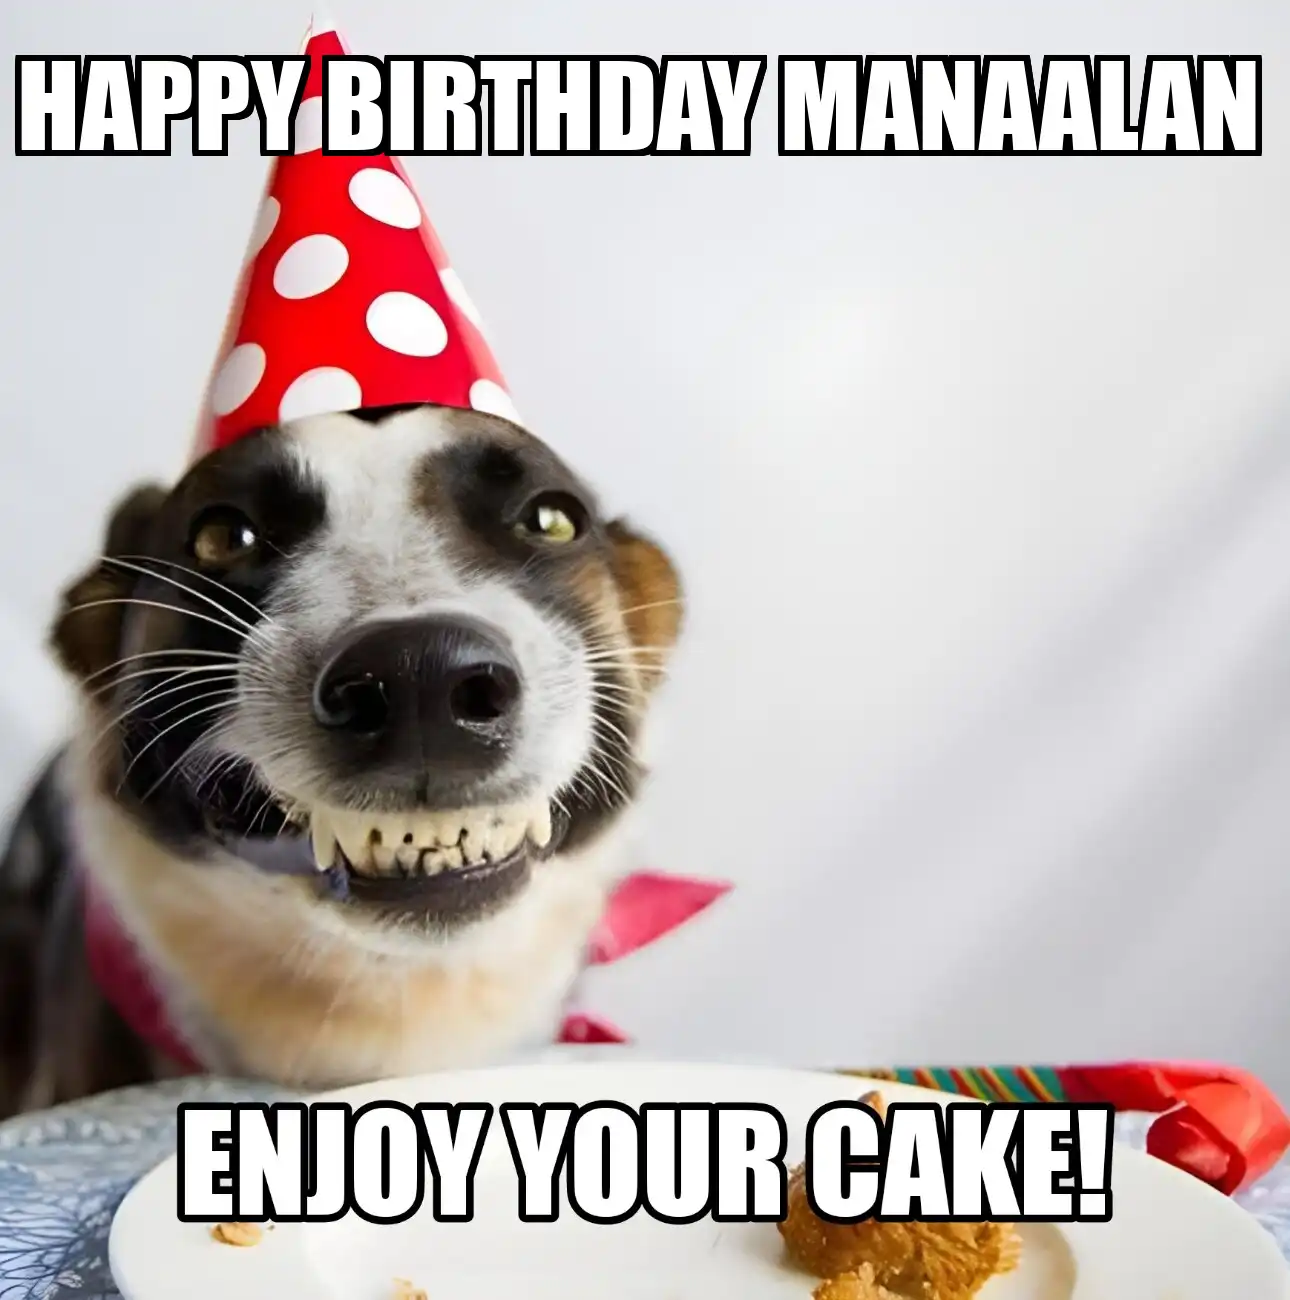 Happy Birthday Manaalan Enjoy Your Cake Dog Meme